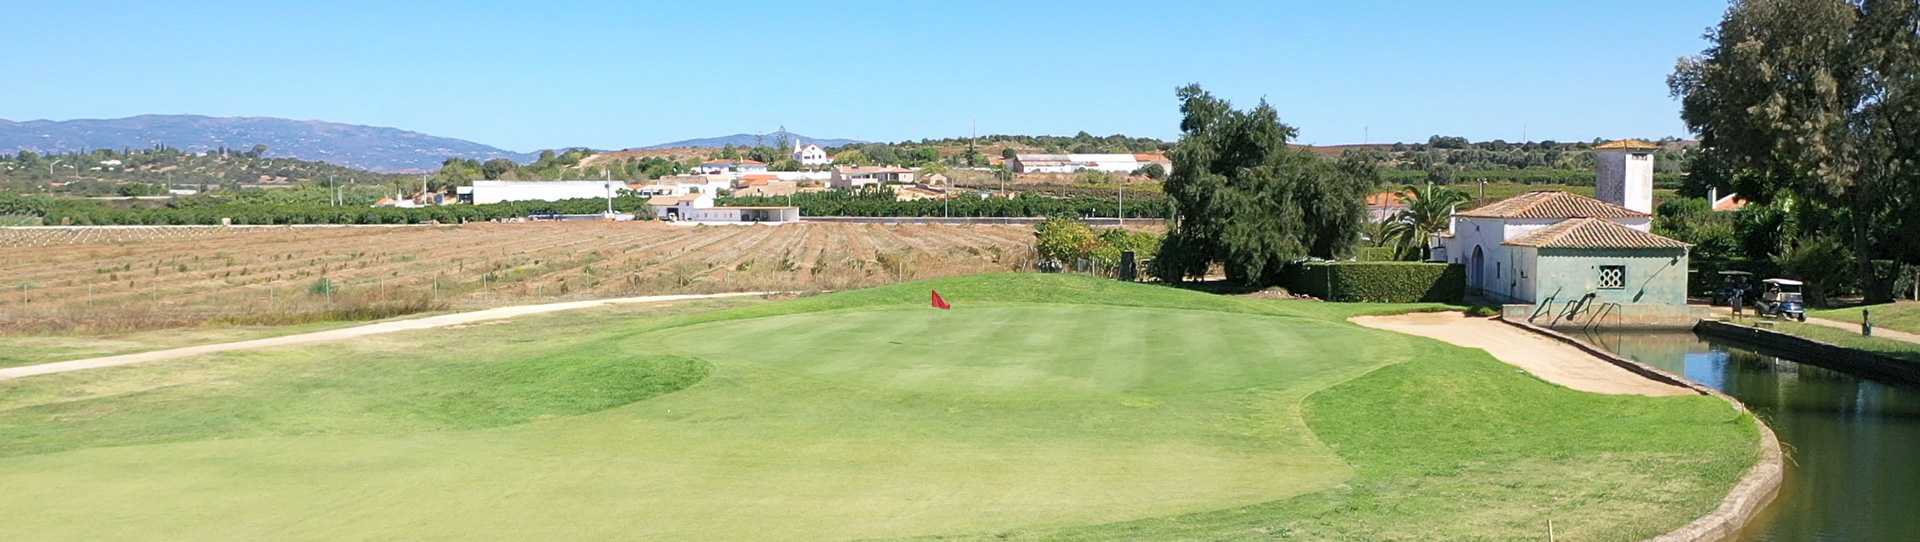 Portugal golf courses - Penina Resort - Photo 1